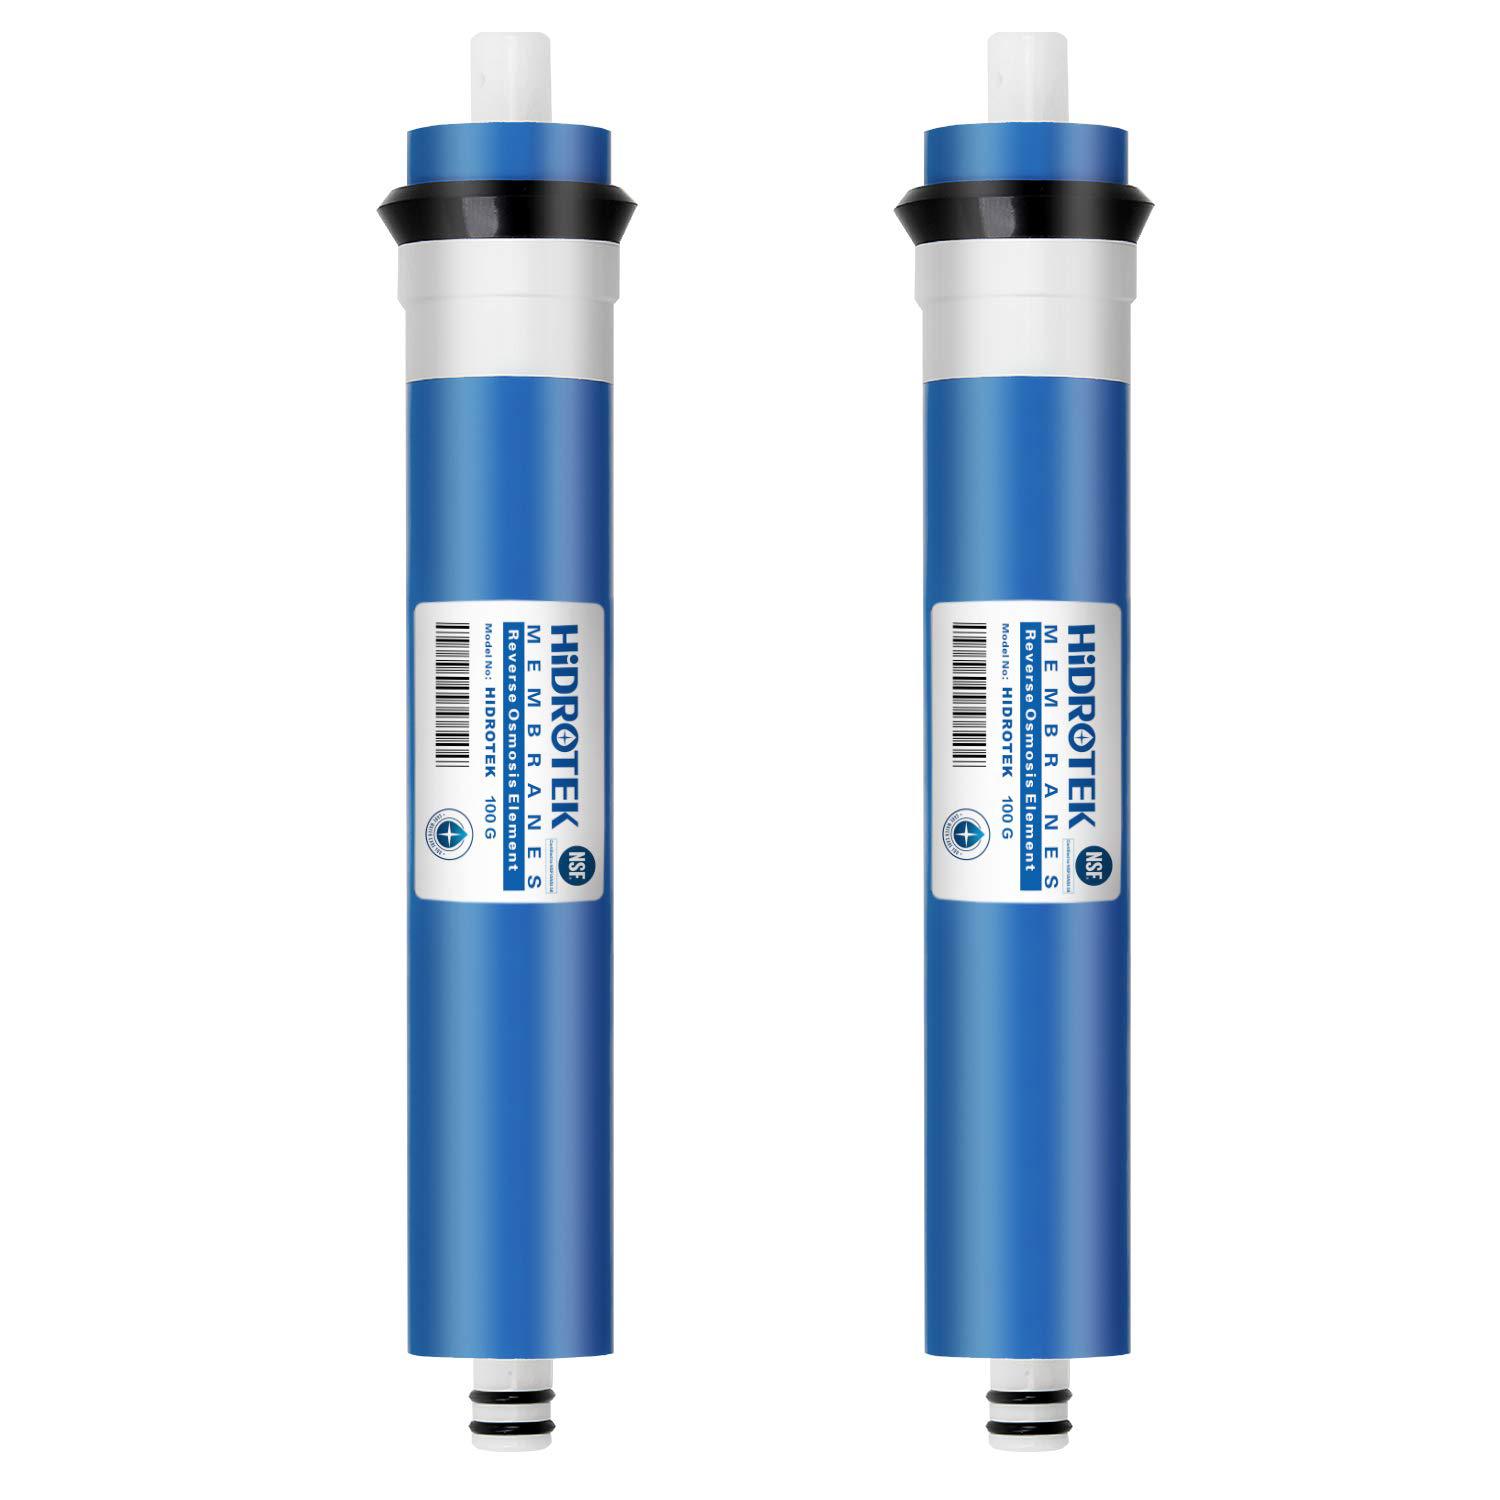 geekpure reverse osmosis ro membrane 100 gpd -nsf certificated-water filter replacement cartridge-pack 2